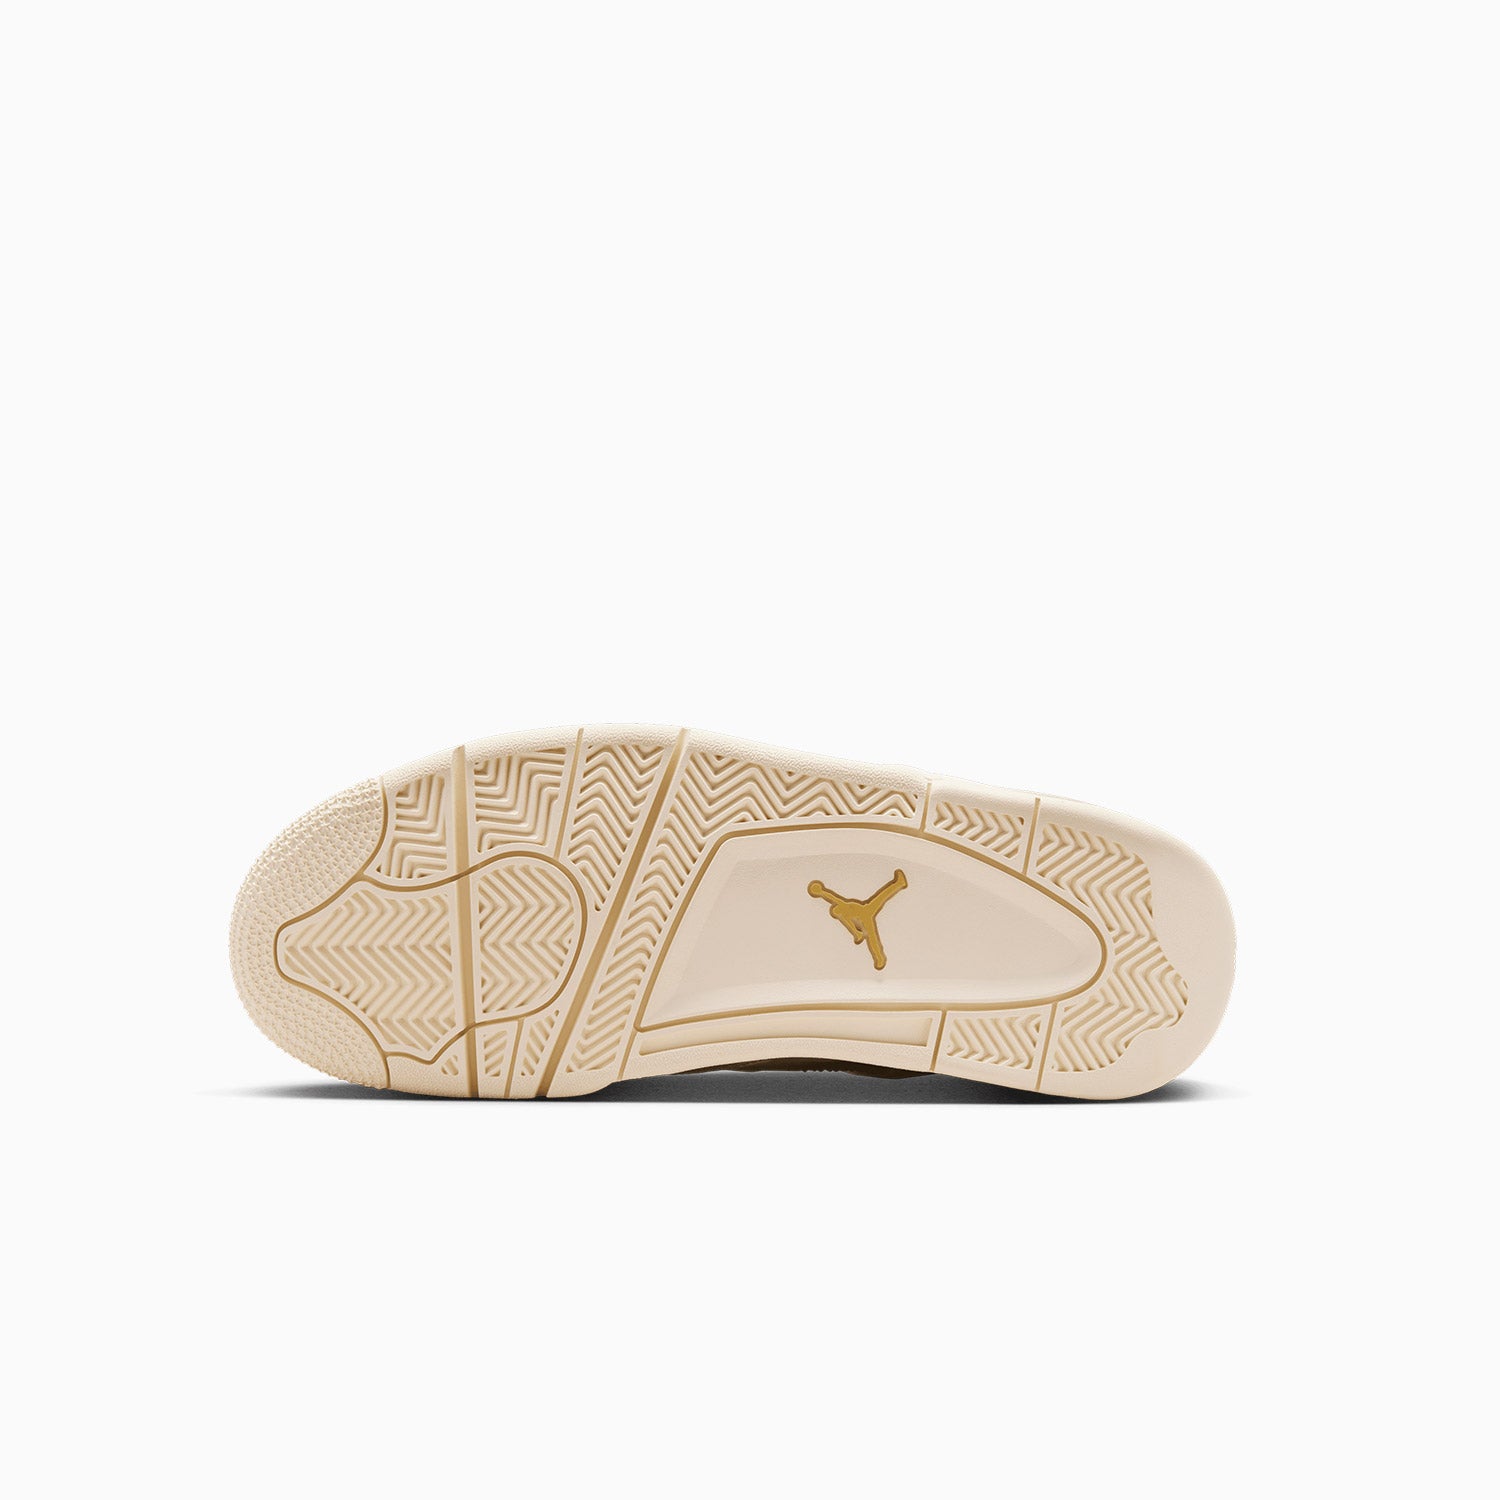 womens-air-jordan-4-retro-metallic-gold-shoes-aq9129-170